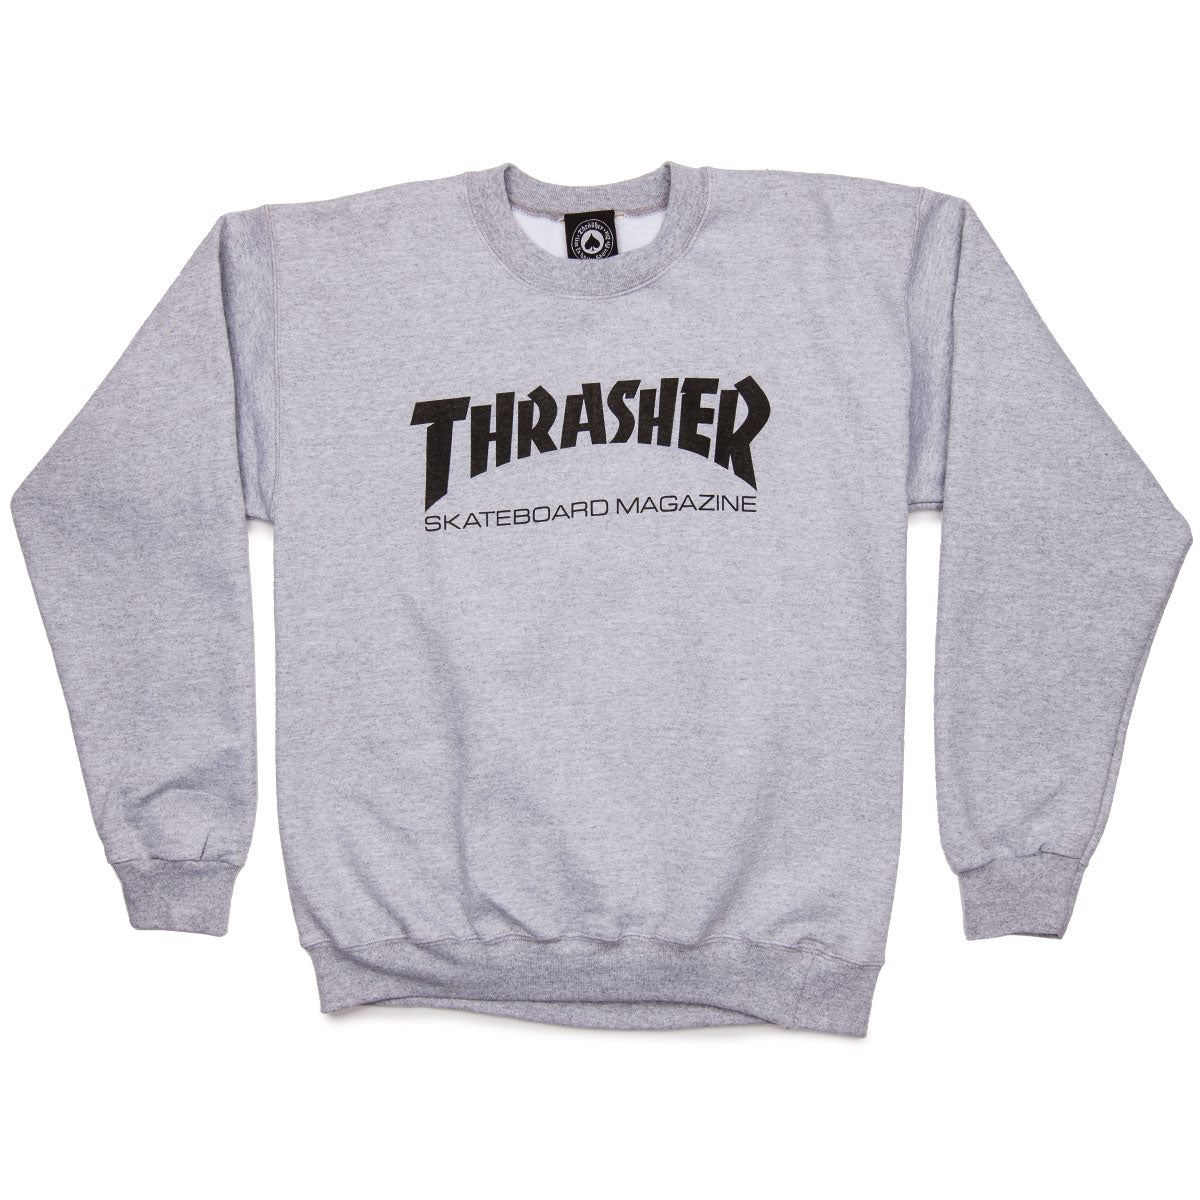 Thrasher Skate Mag Crew Sweatshirt - Grey image 1